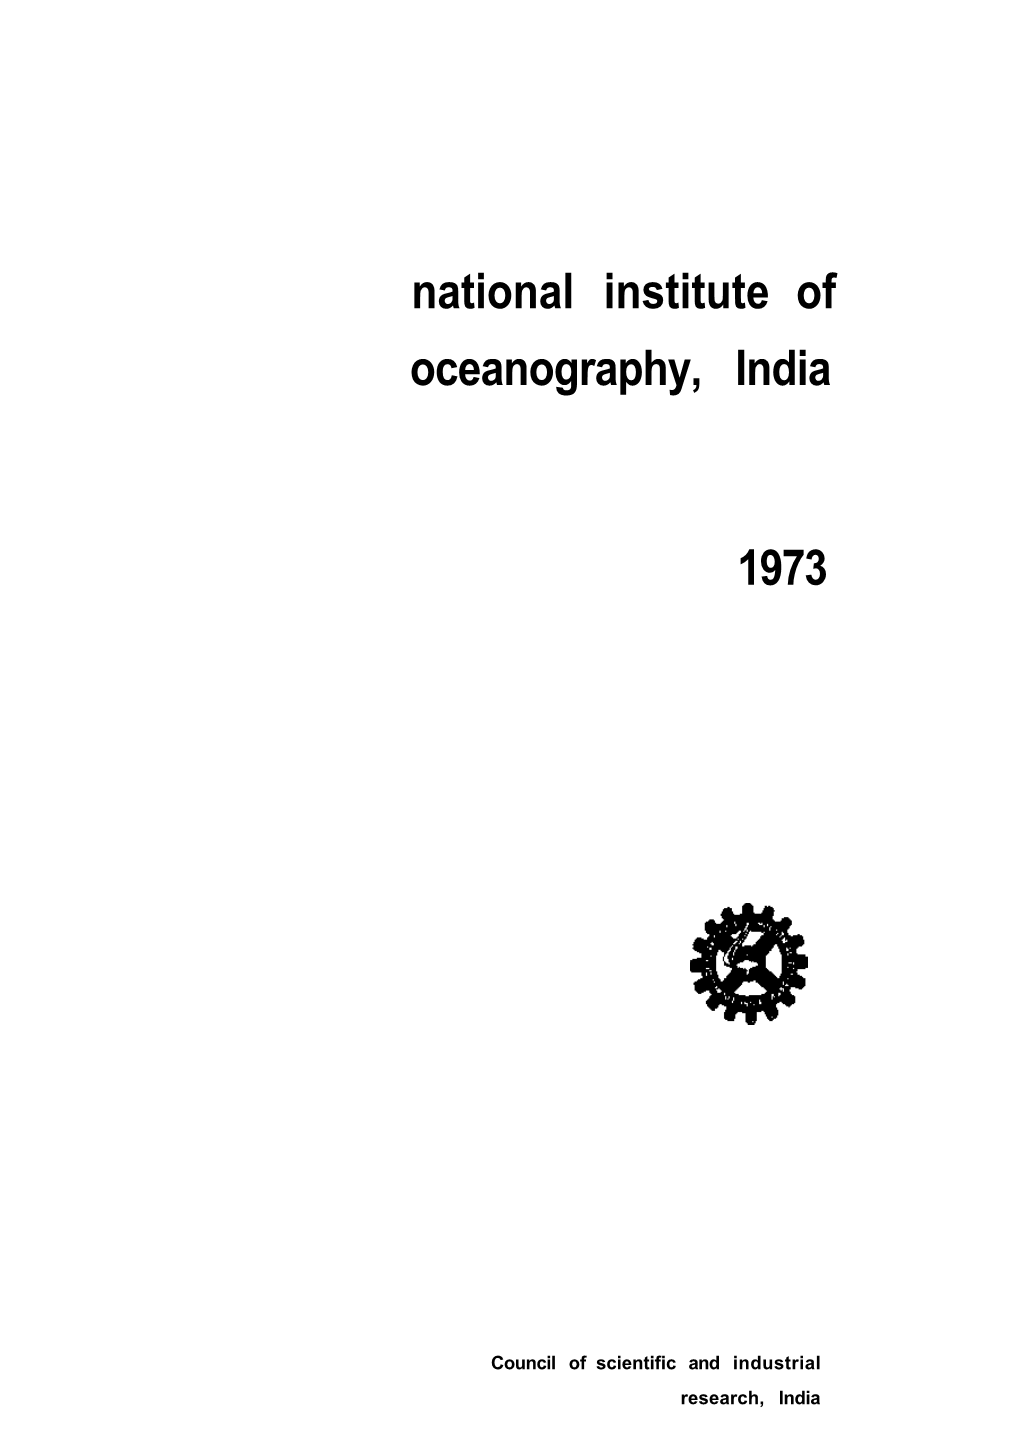 National Institute of Oceanography, India 1973